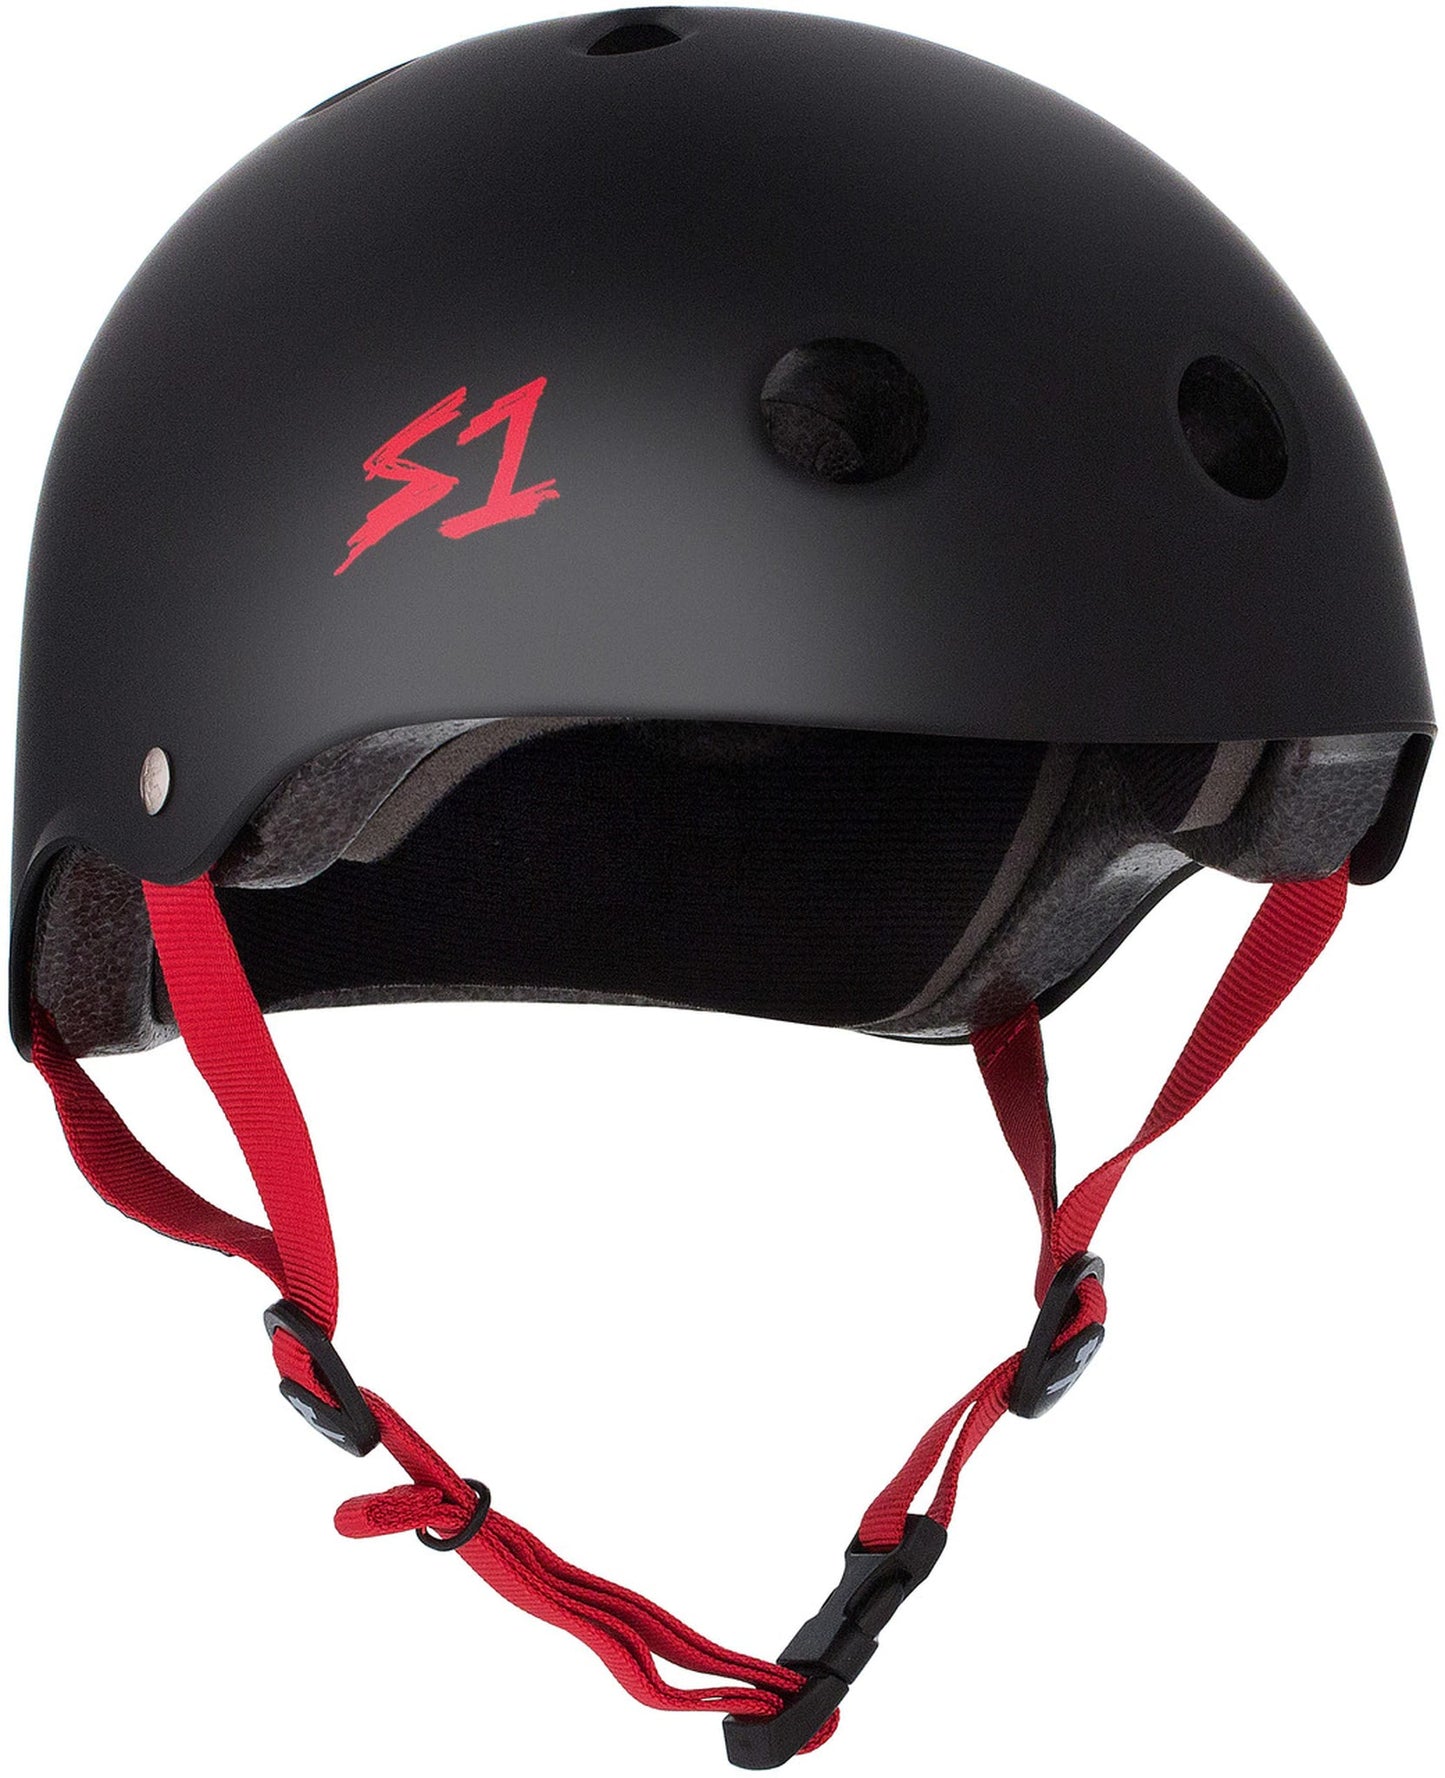 S One Lifer Helmet Skate - Black Matte/Red Strap